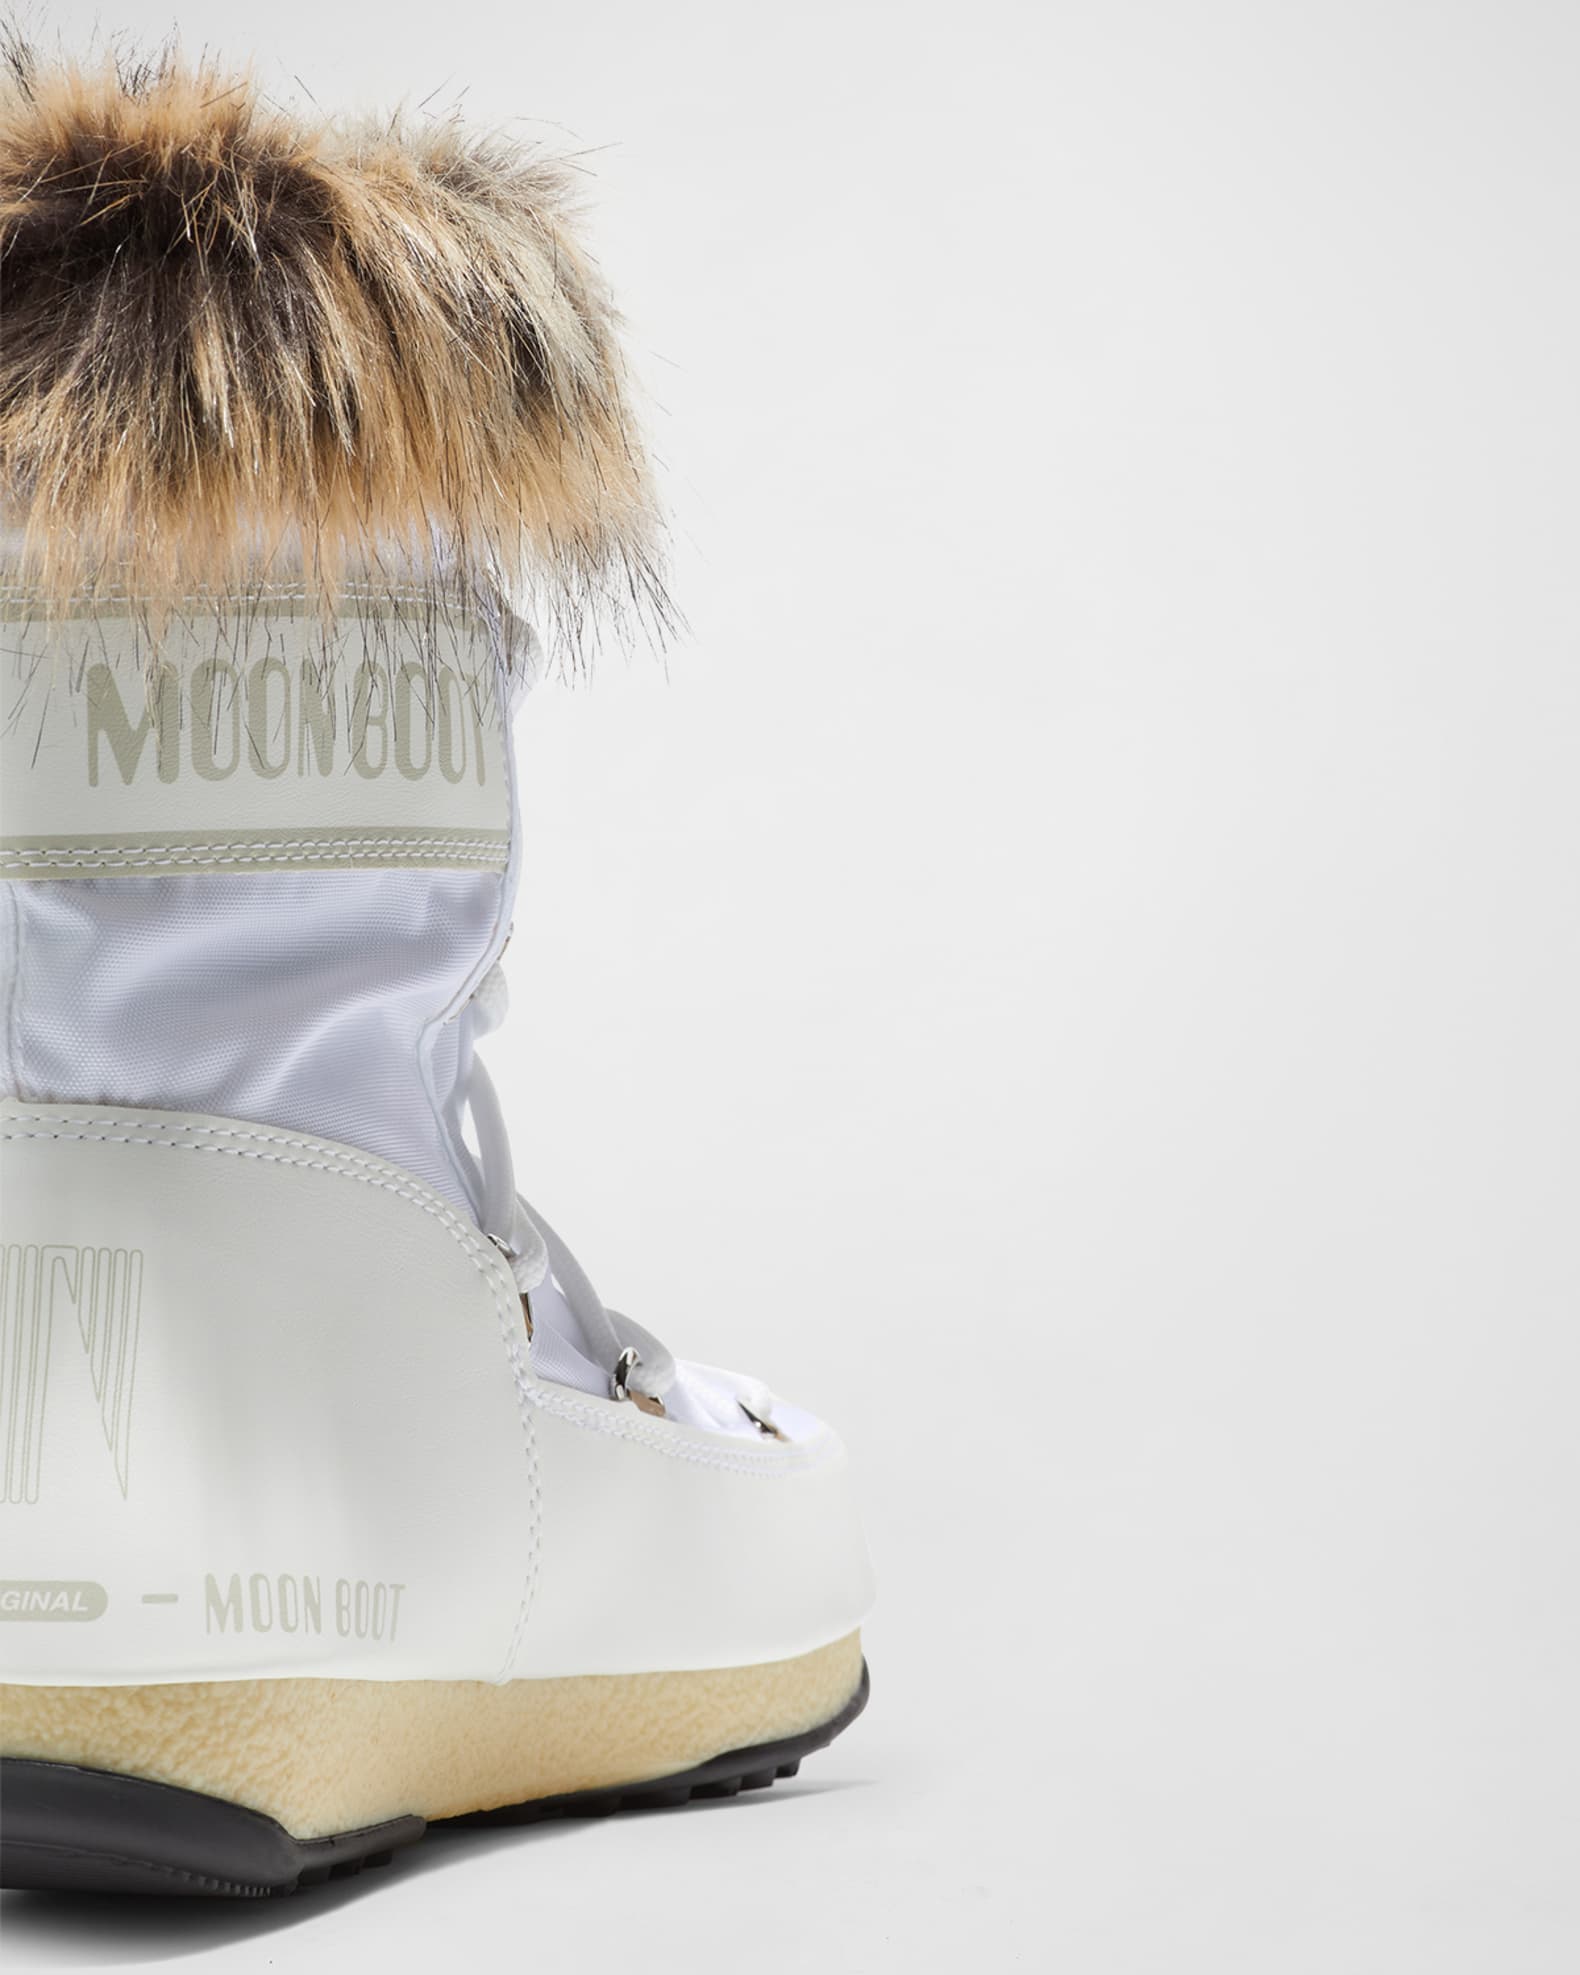 MOON BOOT Monaco Low Nylon Boots Snow Faux Fur Ankle Boots Nordic